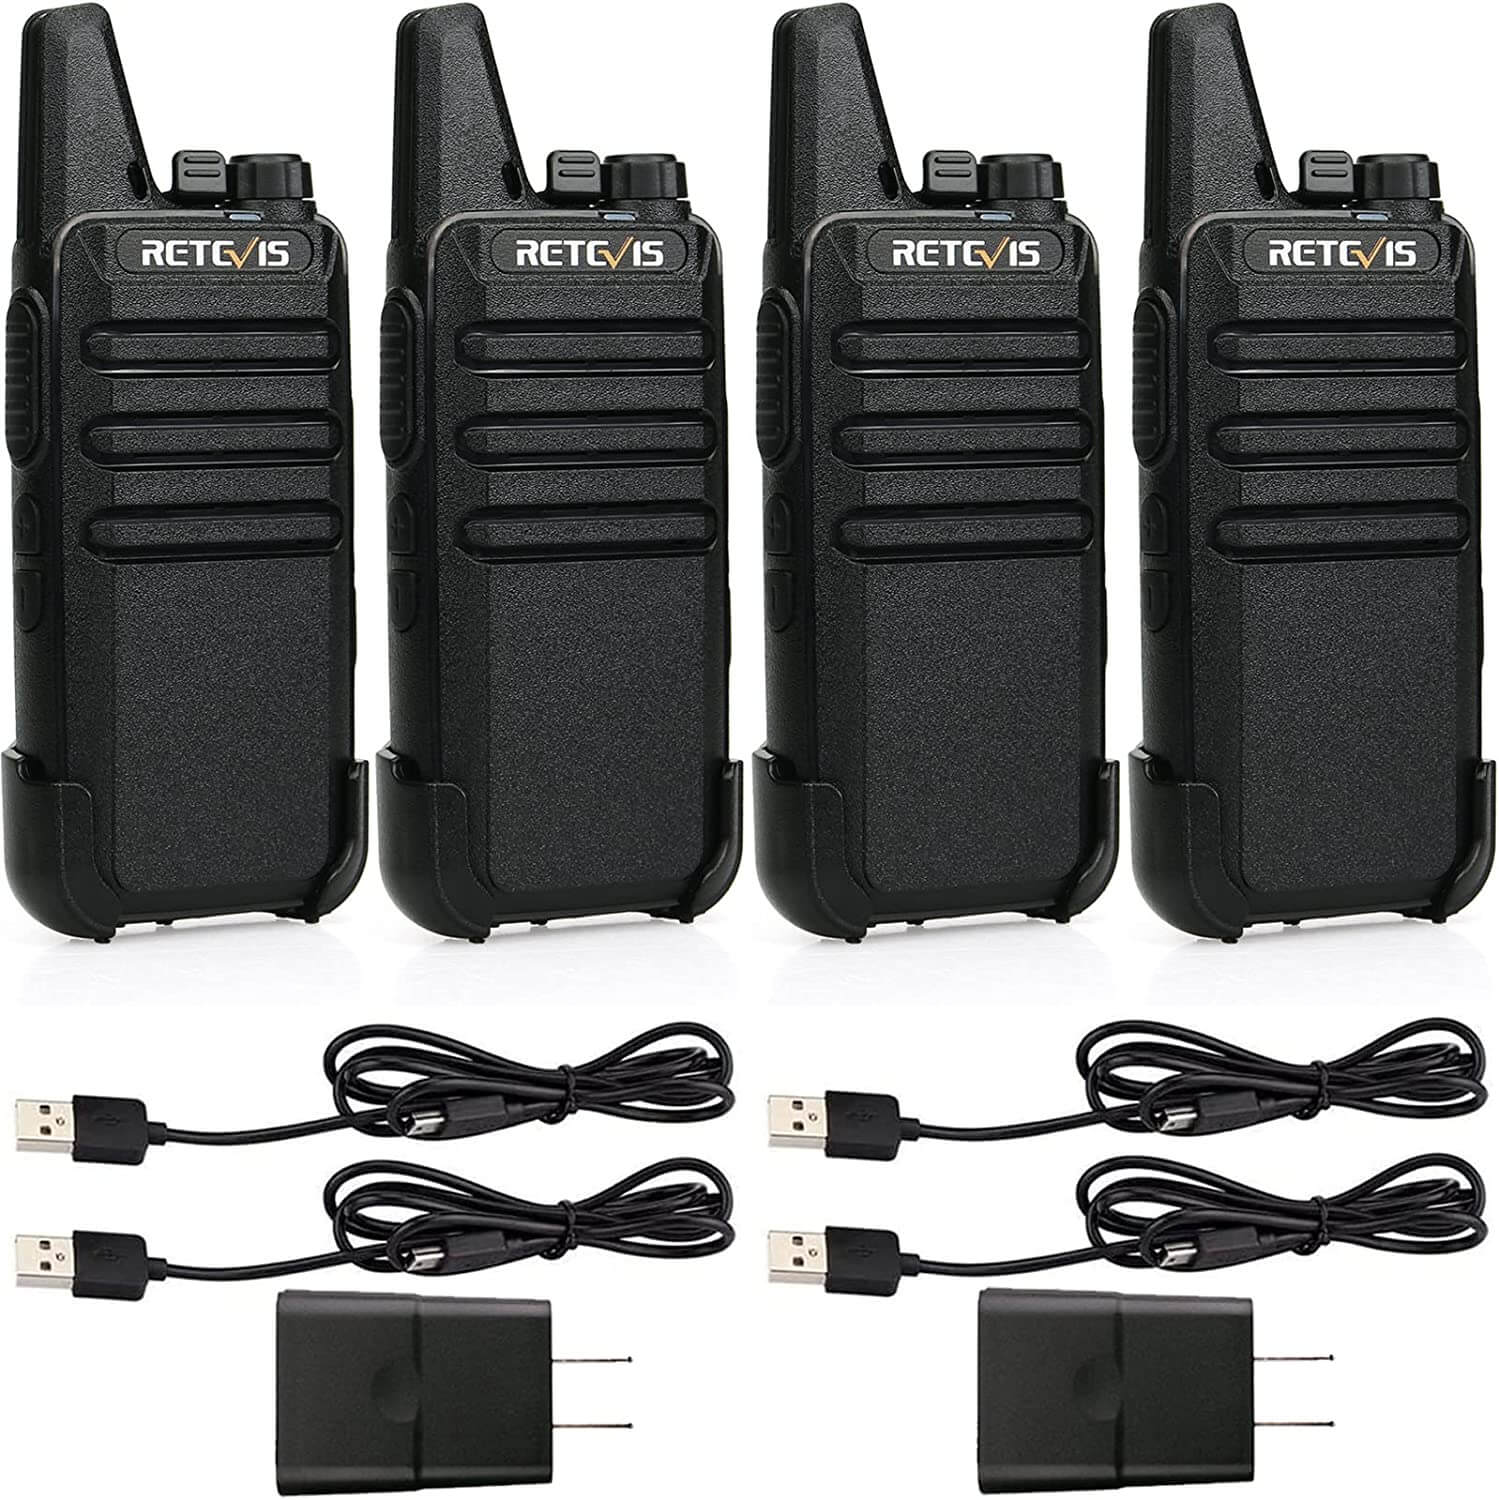 Retevis RT22 walkie-talkies